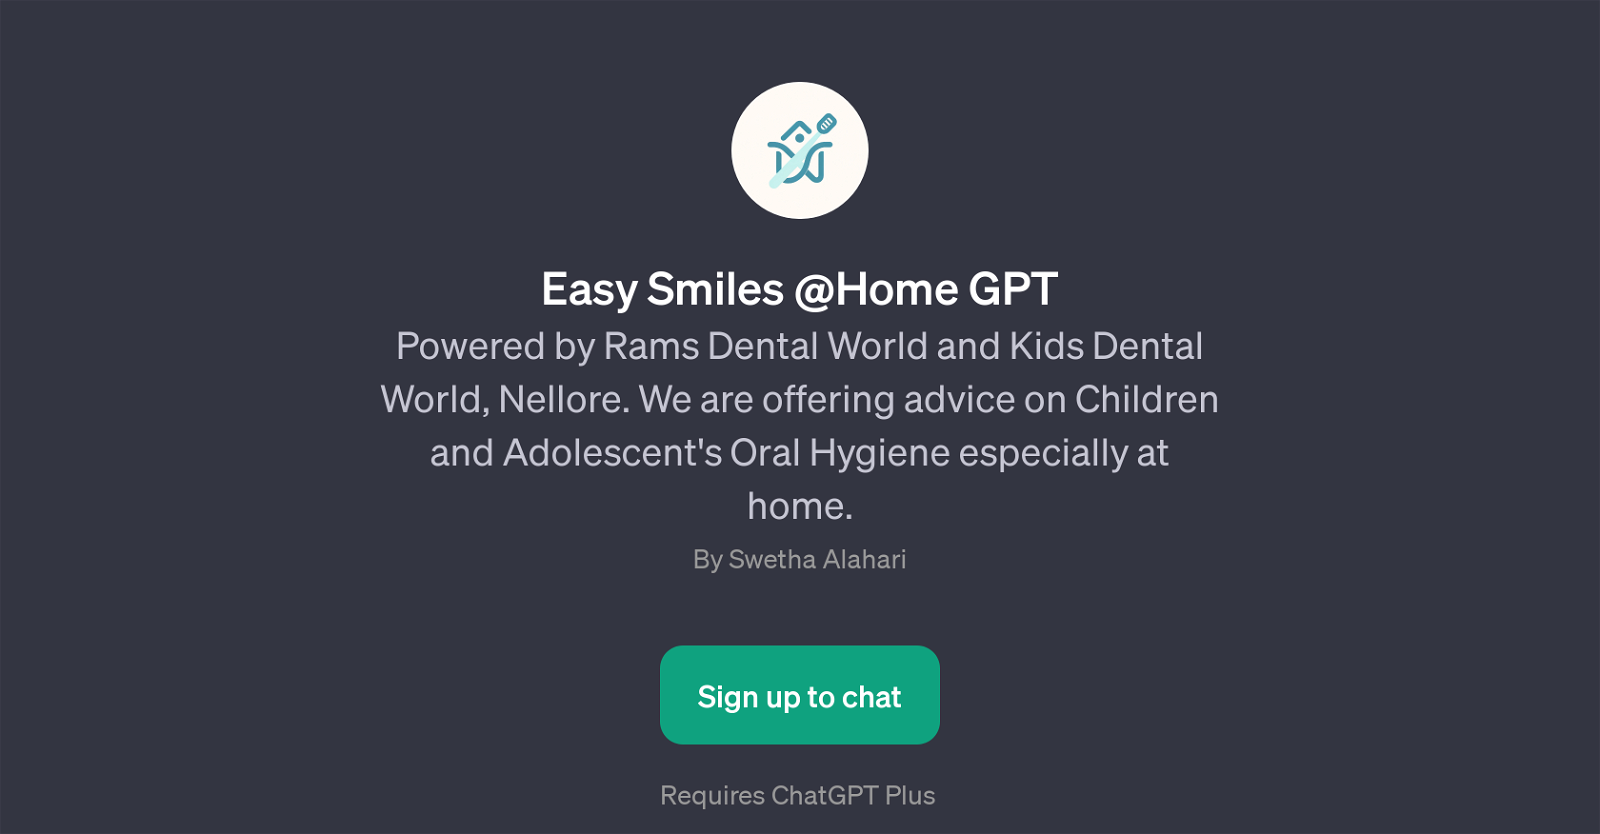 Easy Smiles @Home GPT website